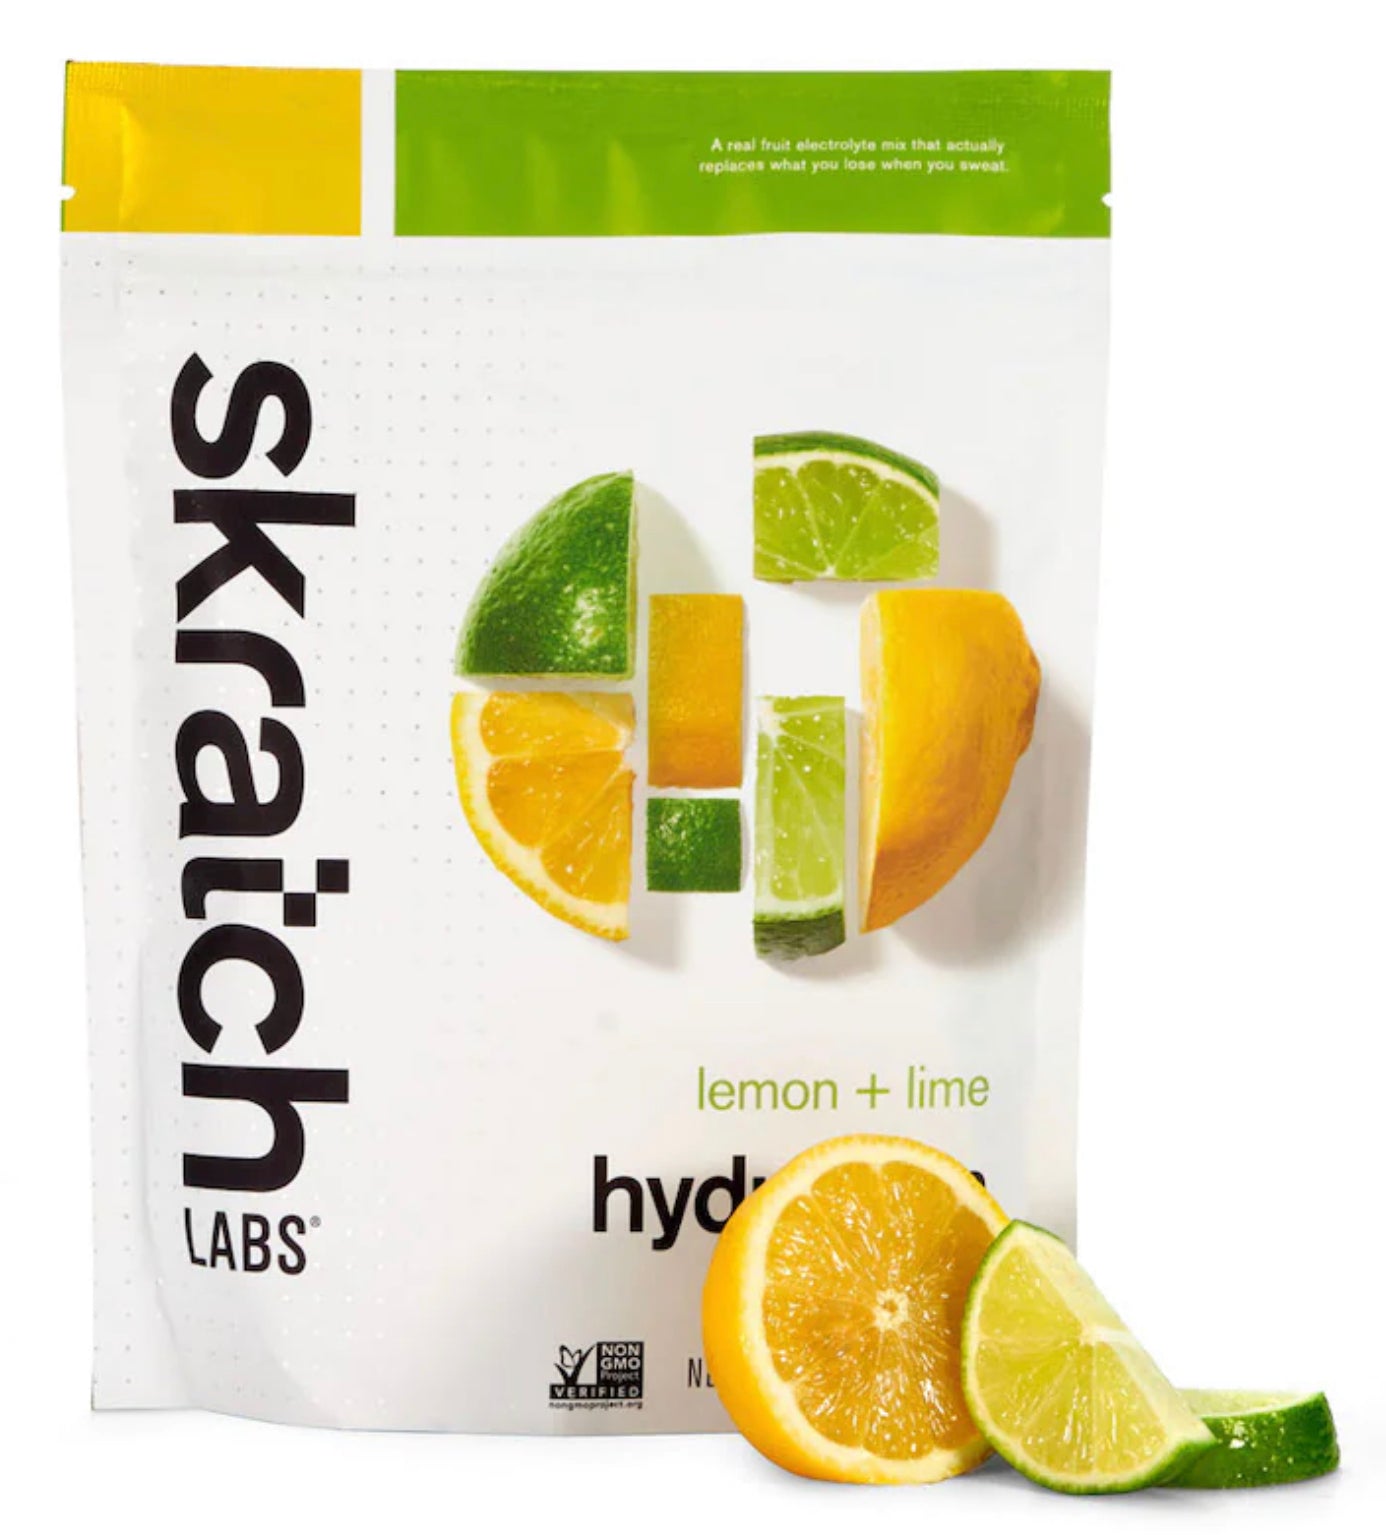 Skratch Labs - Sport Hydration Drink Mix